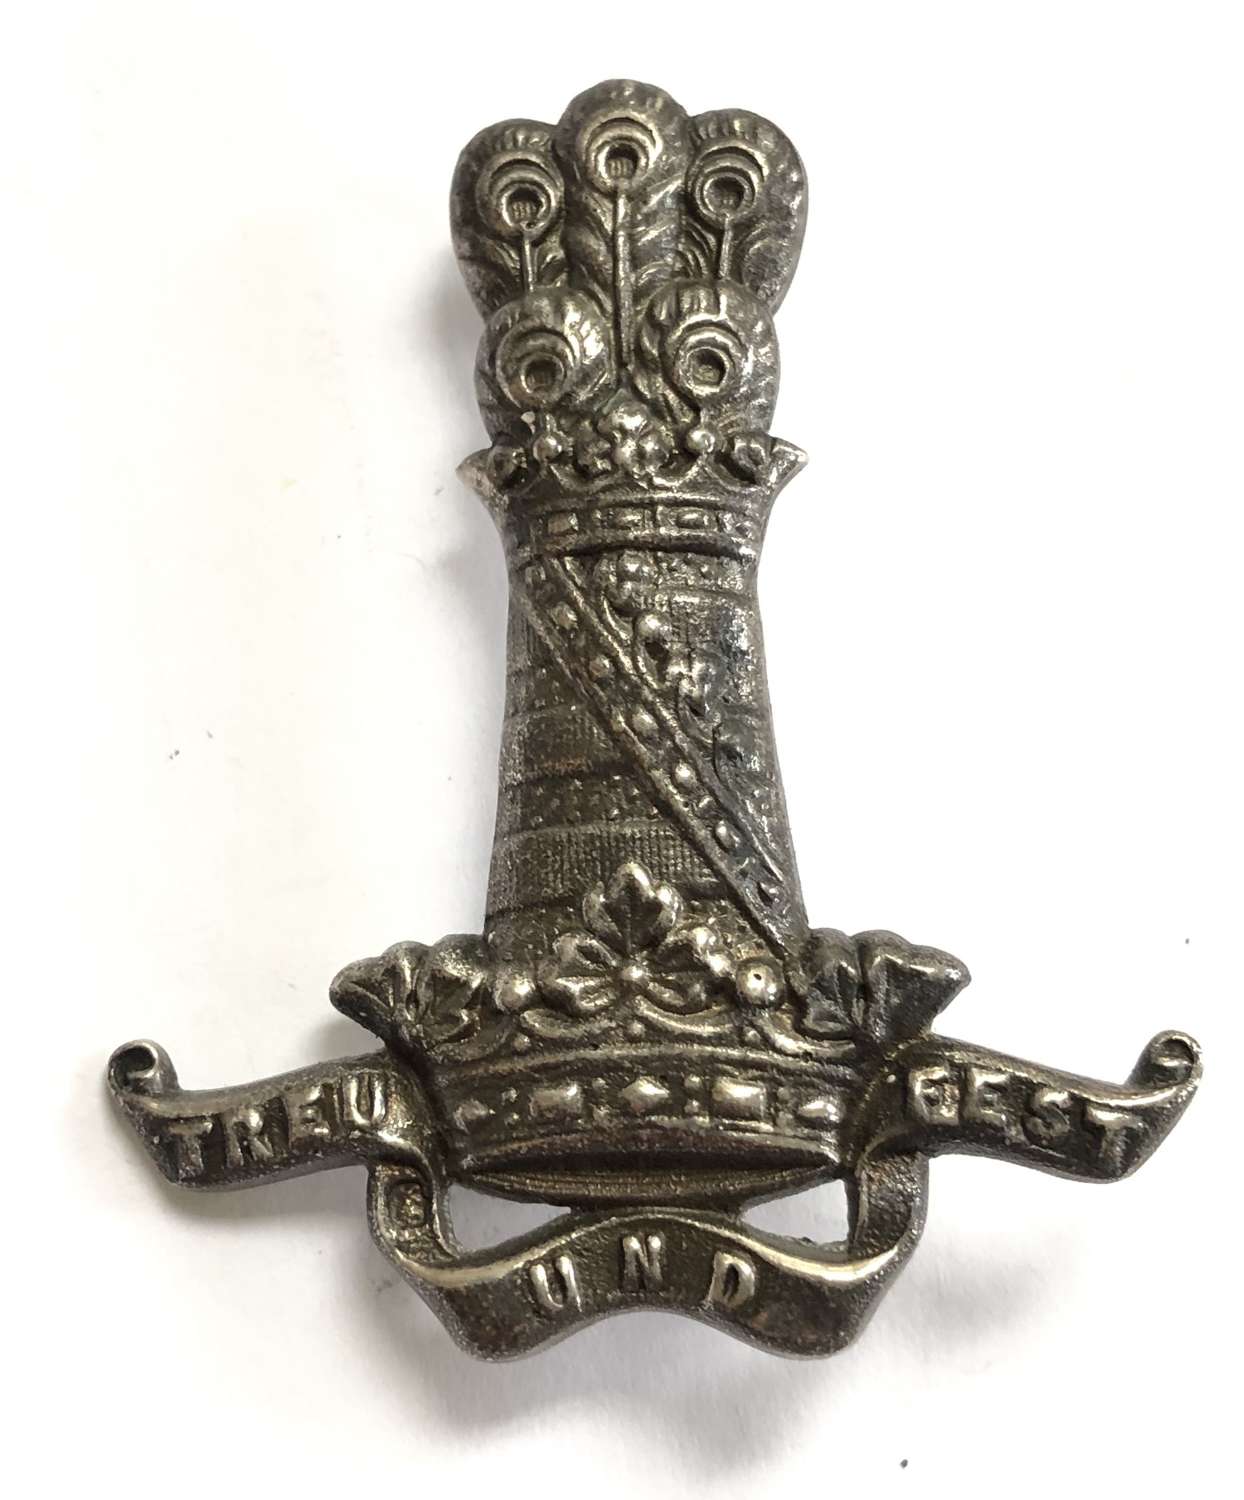 11th Prince Albert’s Own Hussars NCO's arm badge